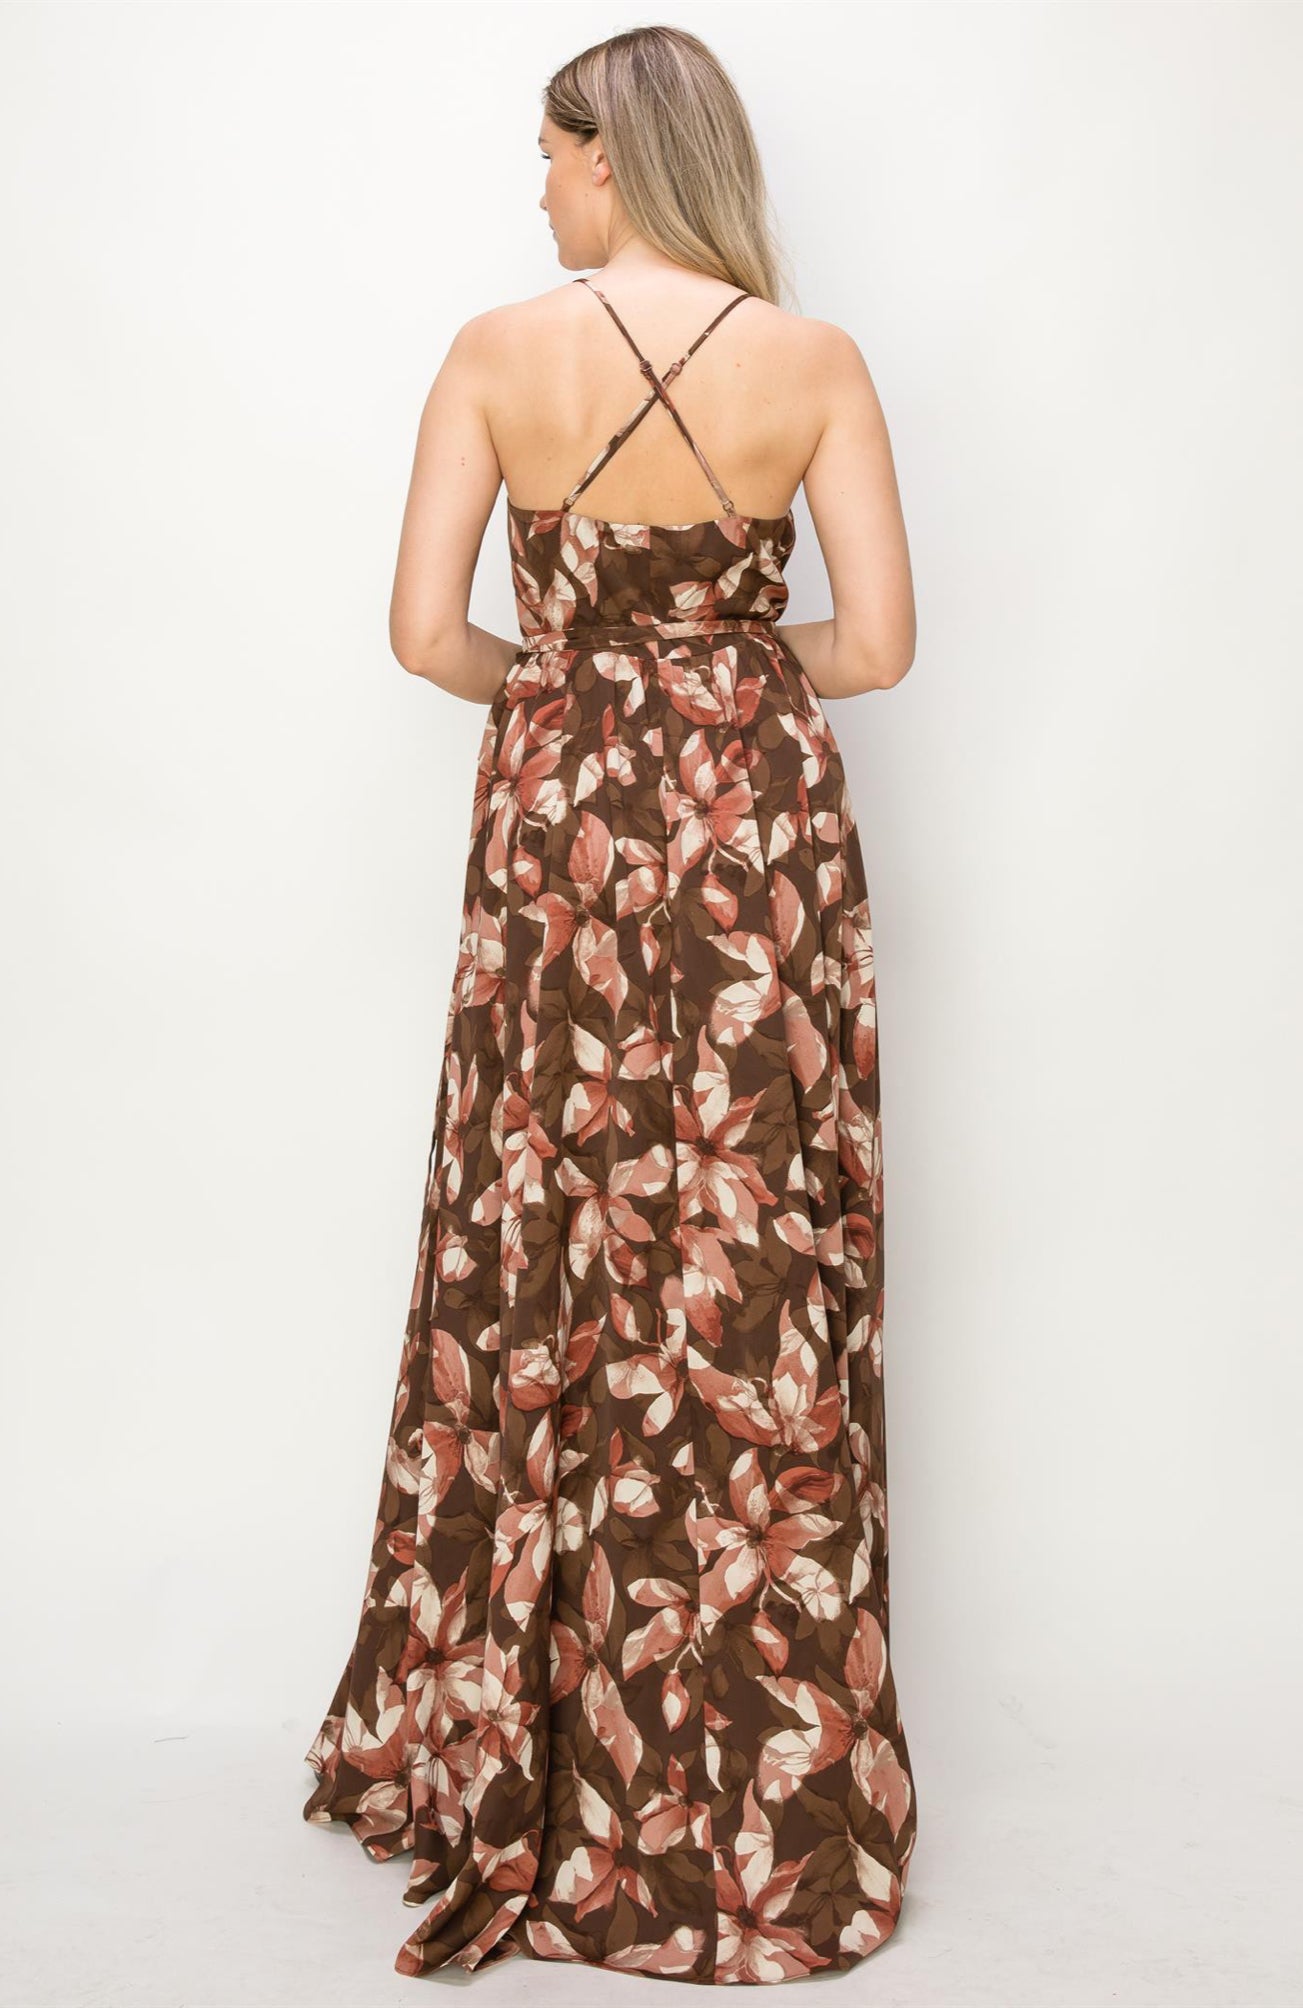 Elegant Floral Dress In Brown